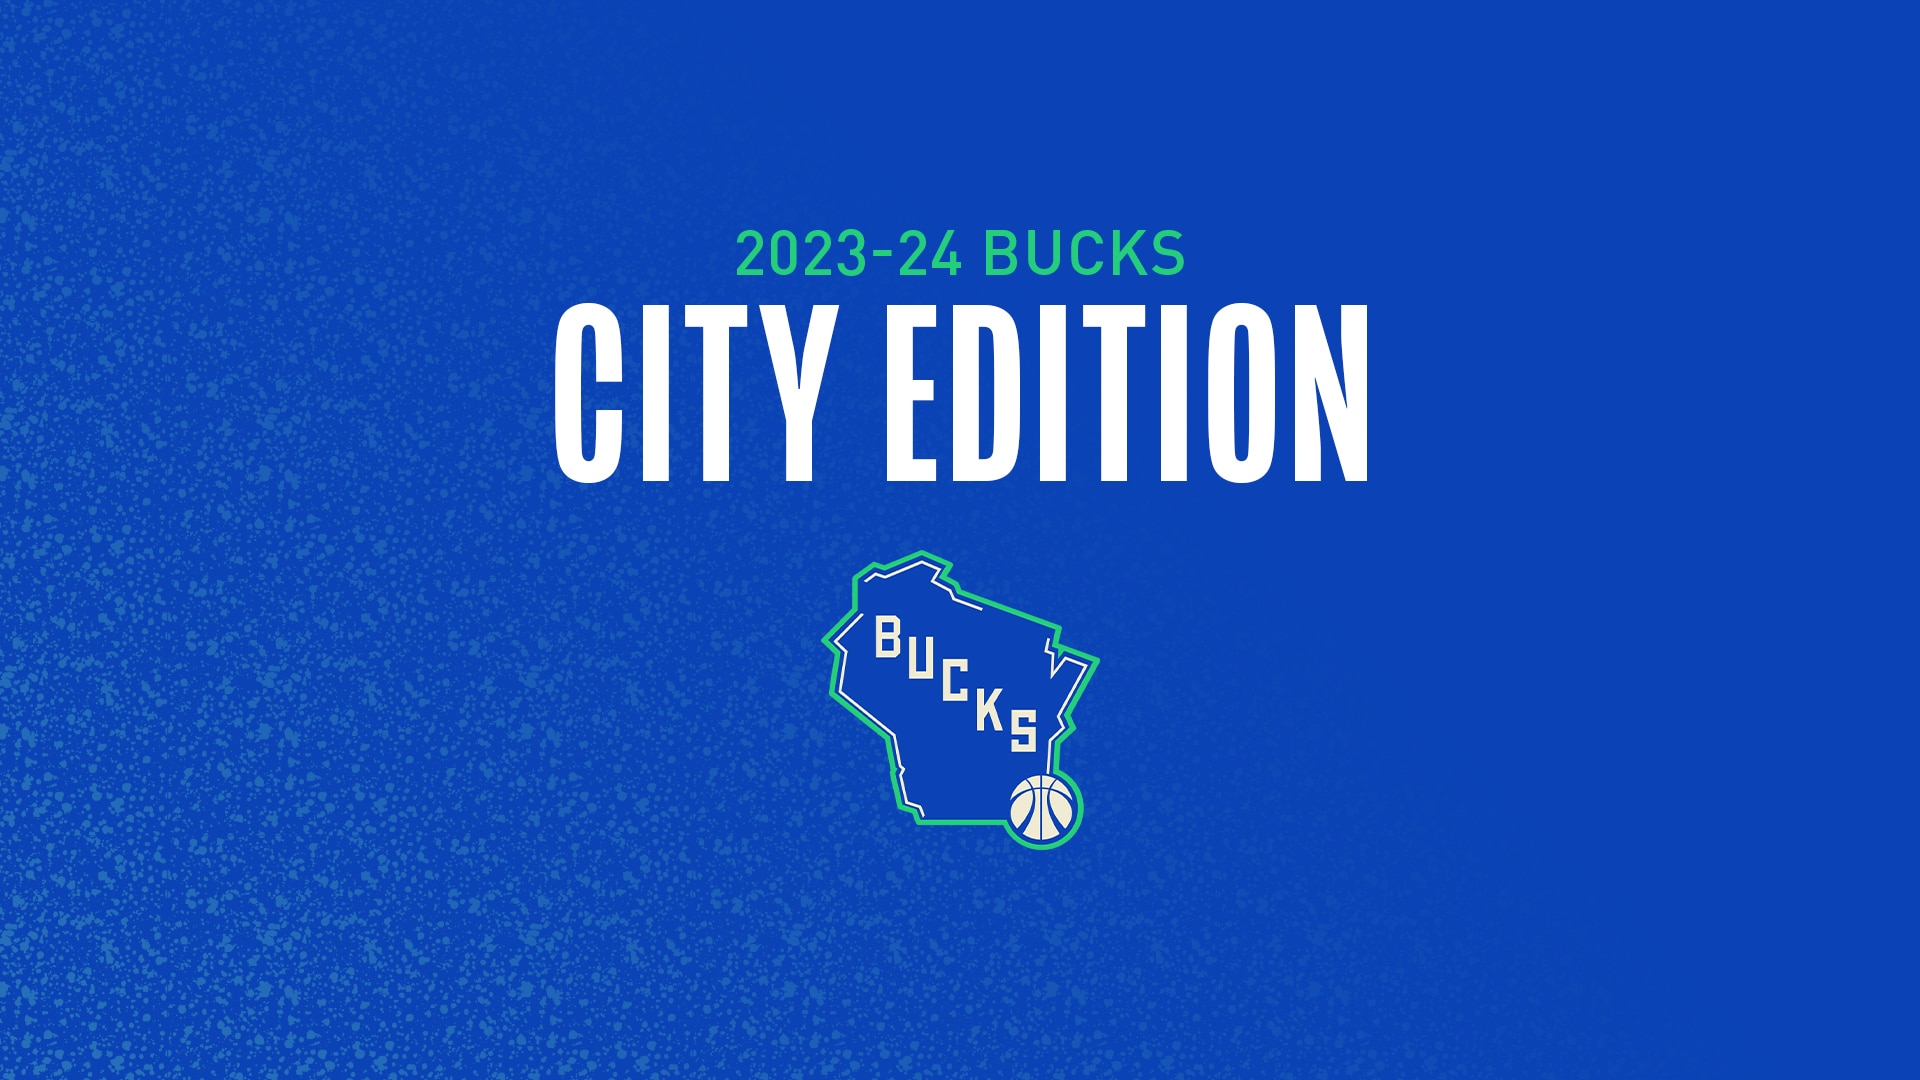 Milwaukee Bucks Unveil New City Edition Uniforms For